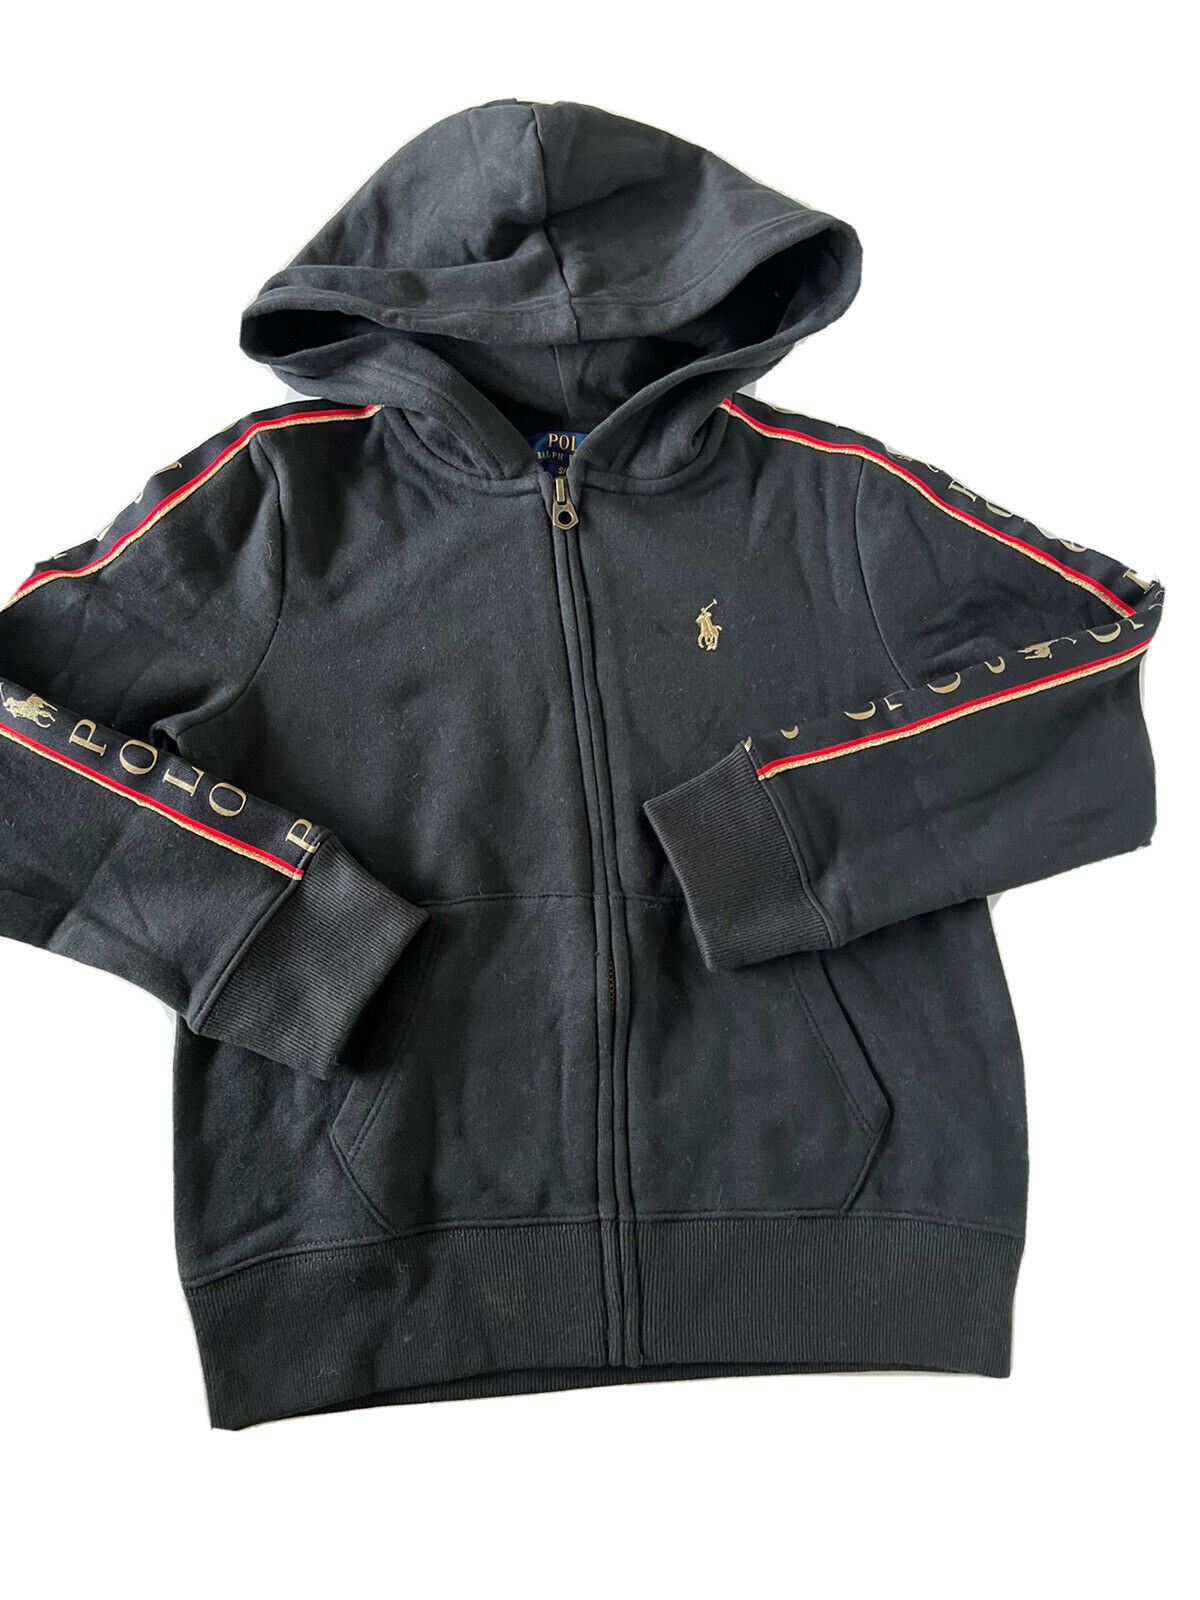 NWT Polo Ralph Lauren Girl's Black Hoodie Jacket S (7)